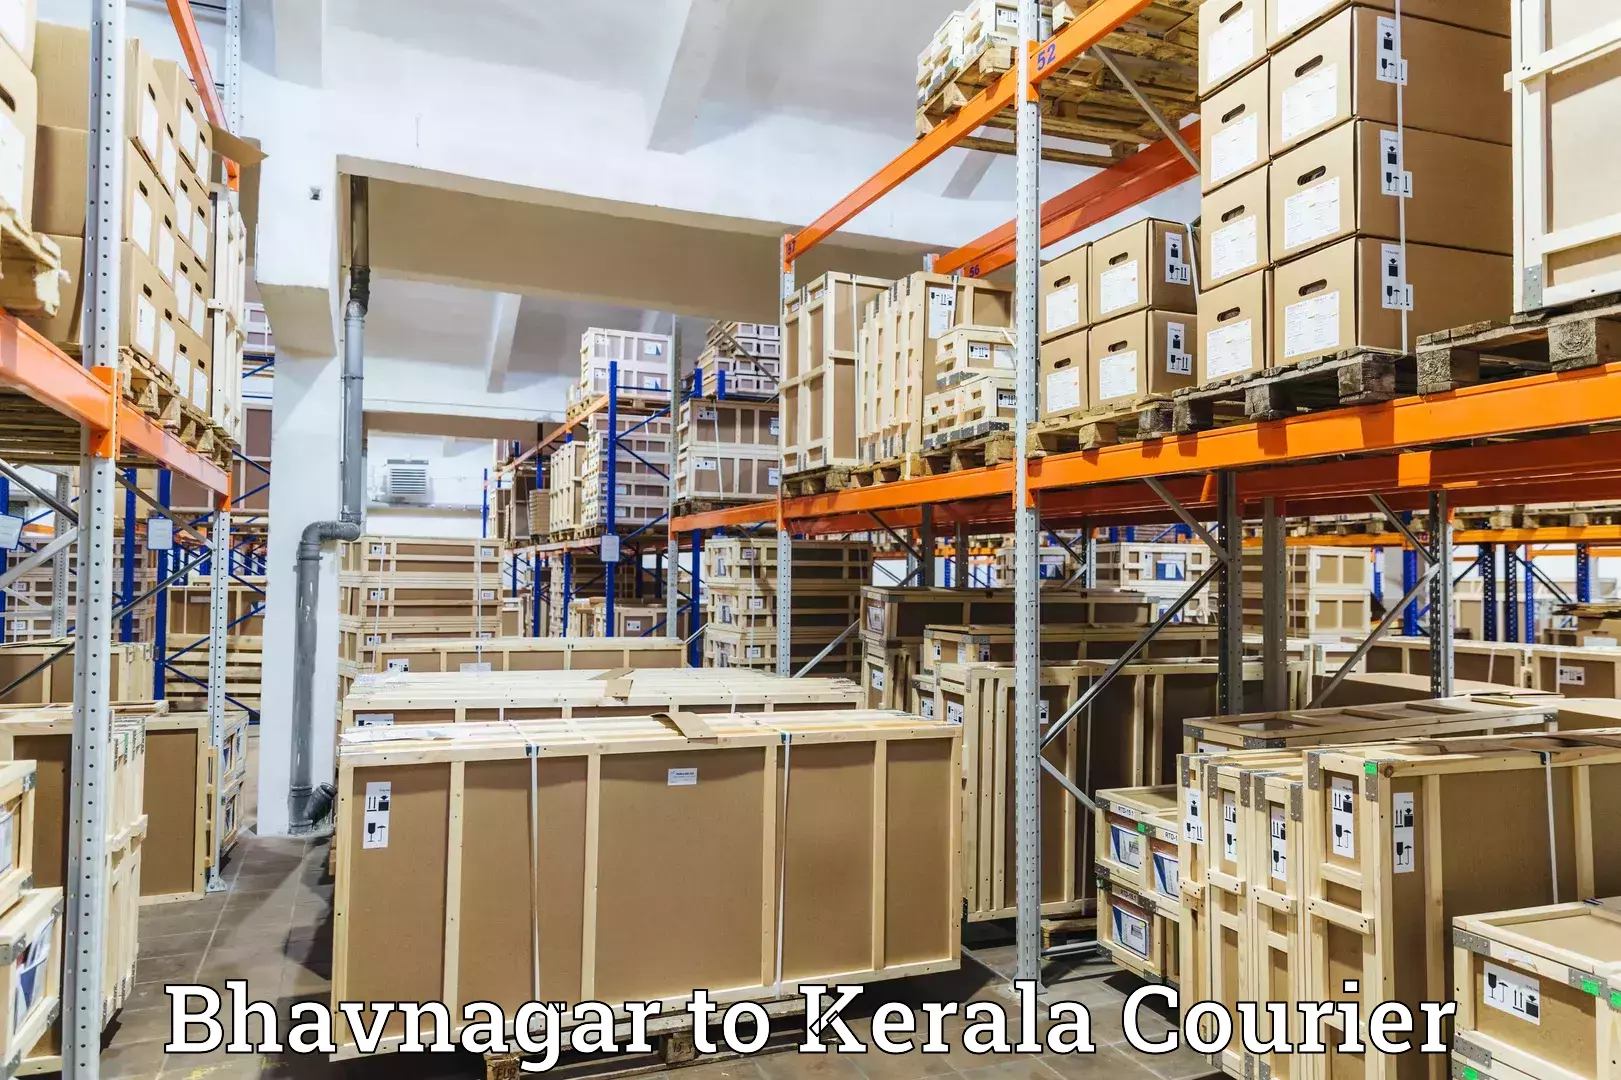 Professional courier handling Bhavnagar to Kochi